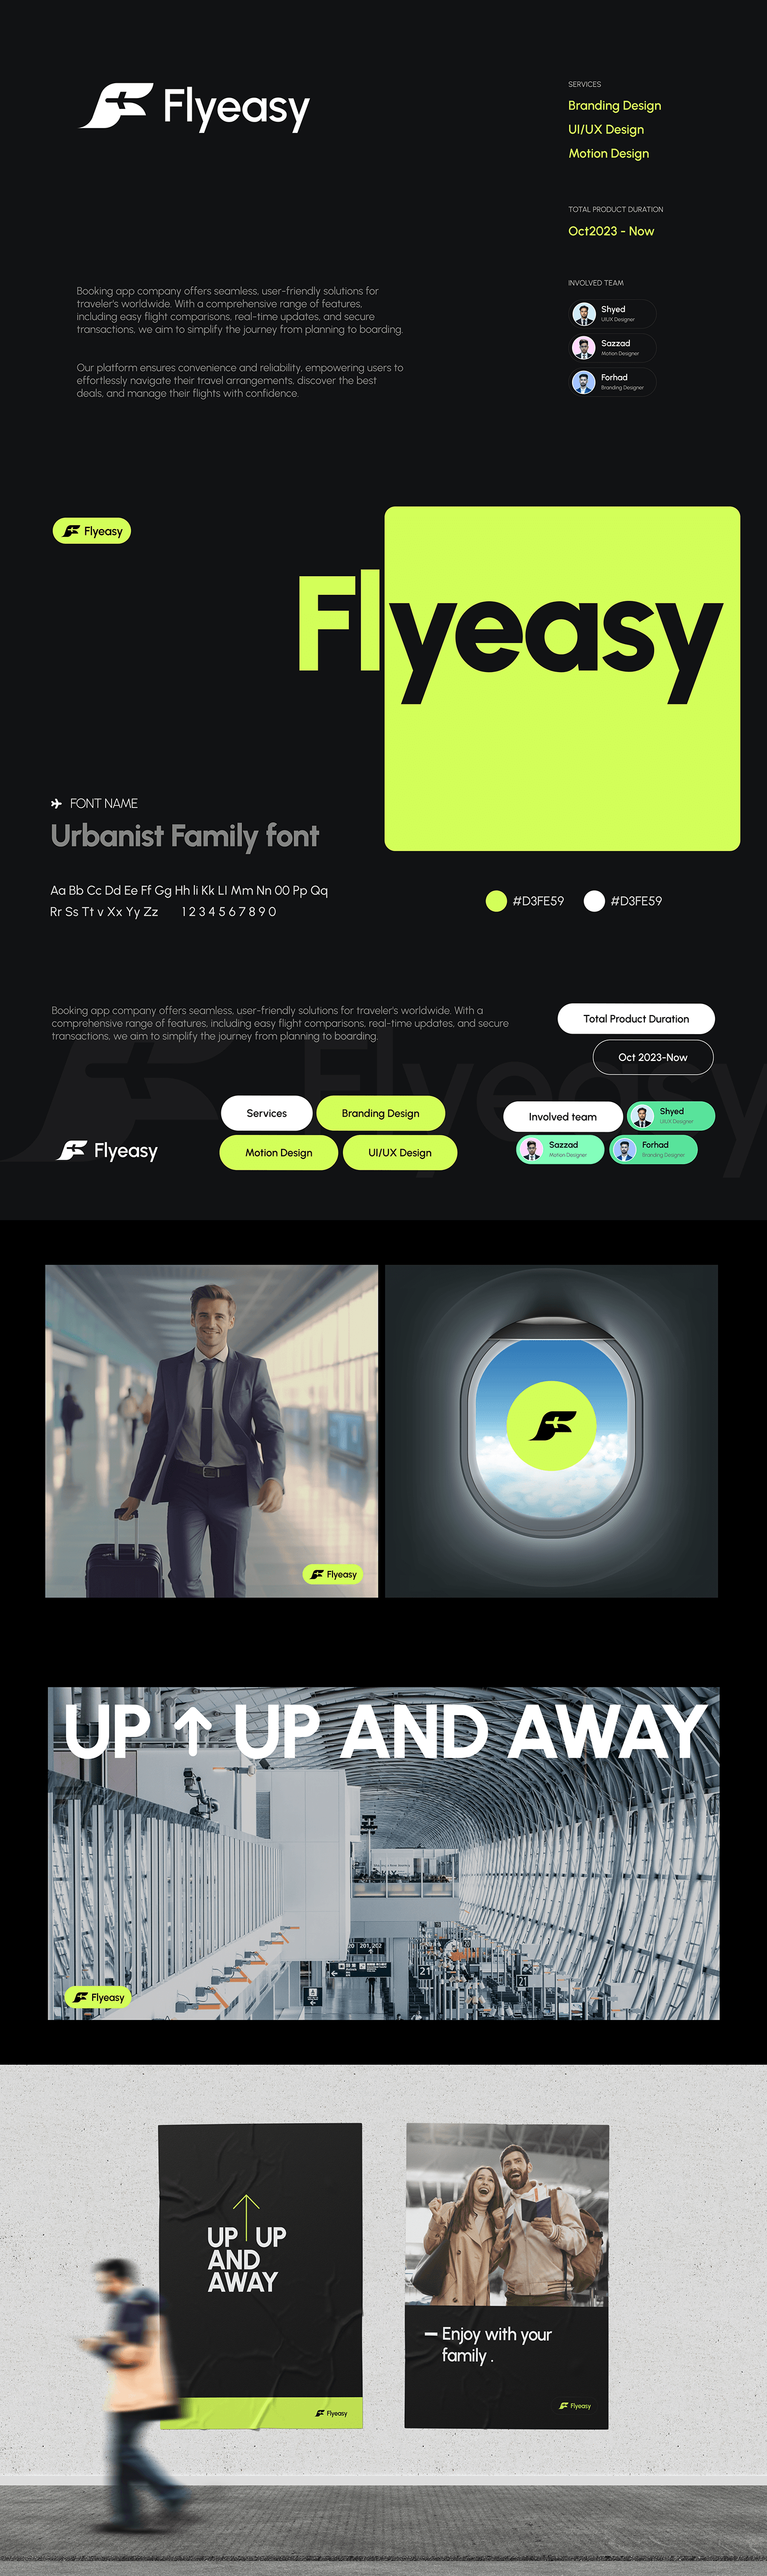 Adobe XD Figma user interface Case Study UX design Mobile app ui design flight booking website flight booking app Flight booking branding